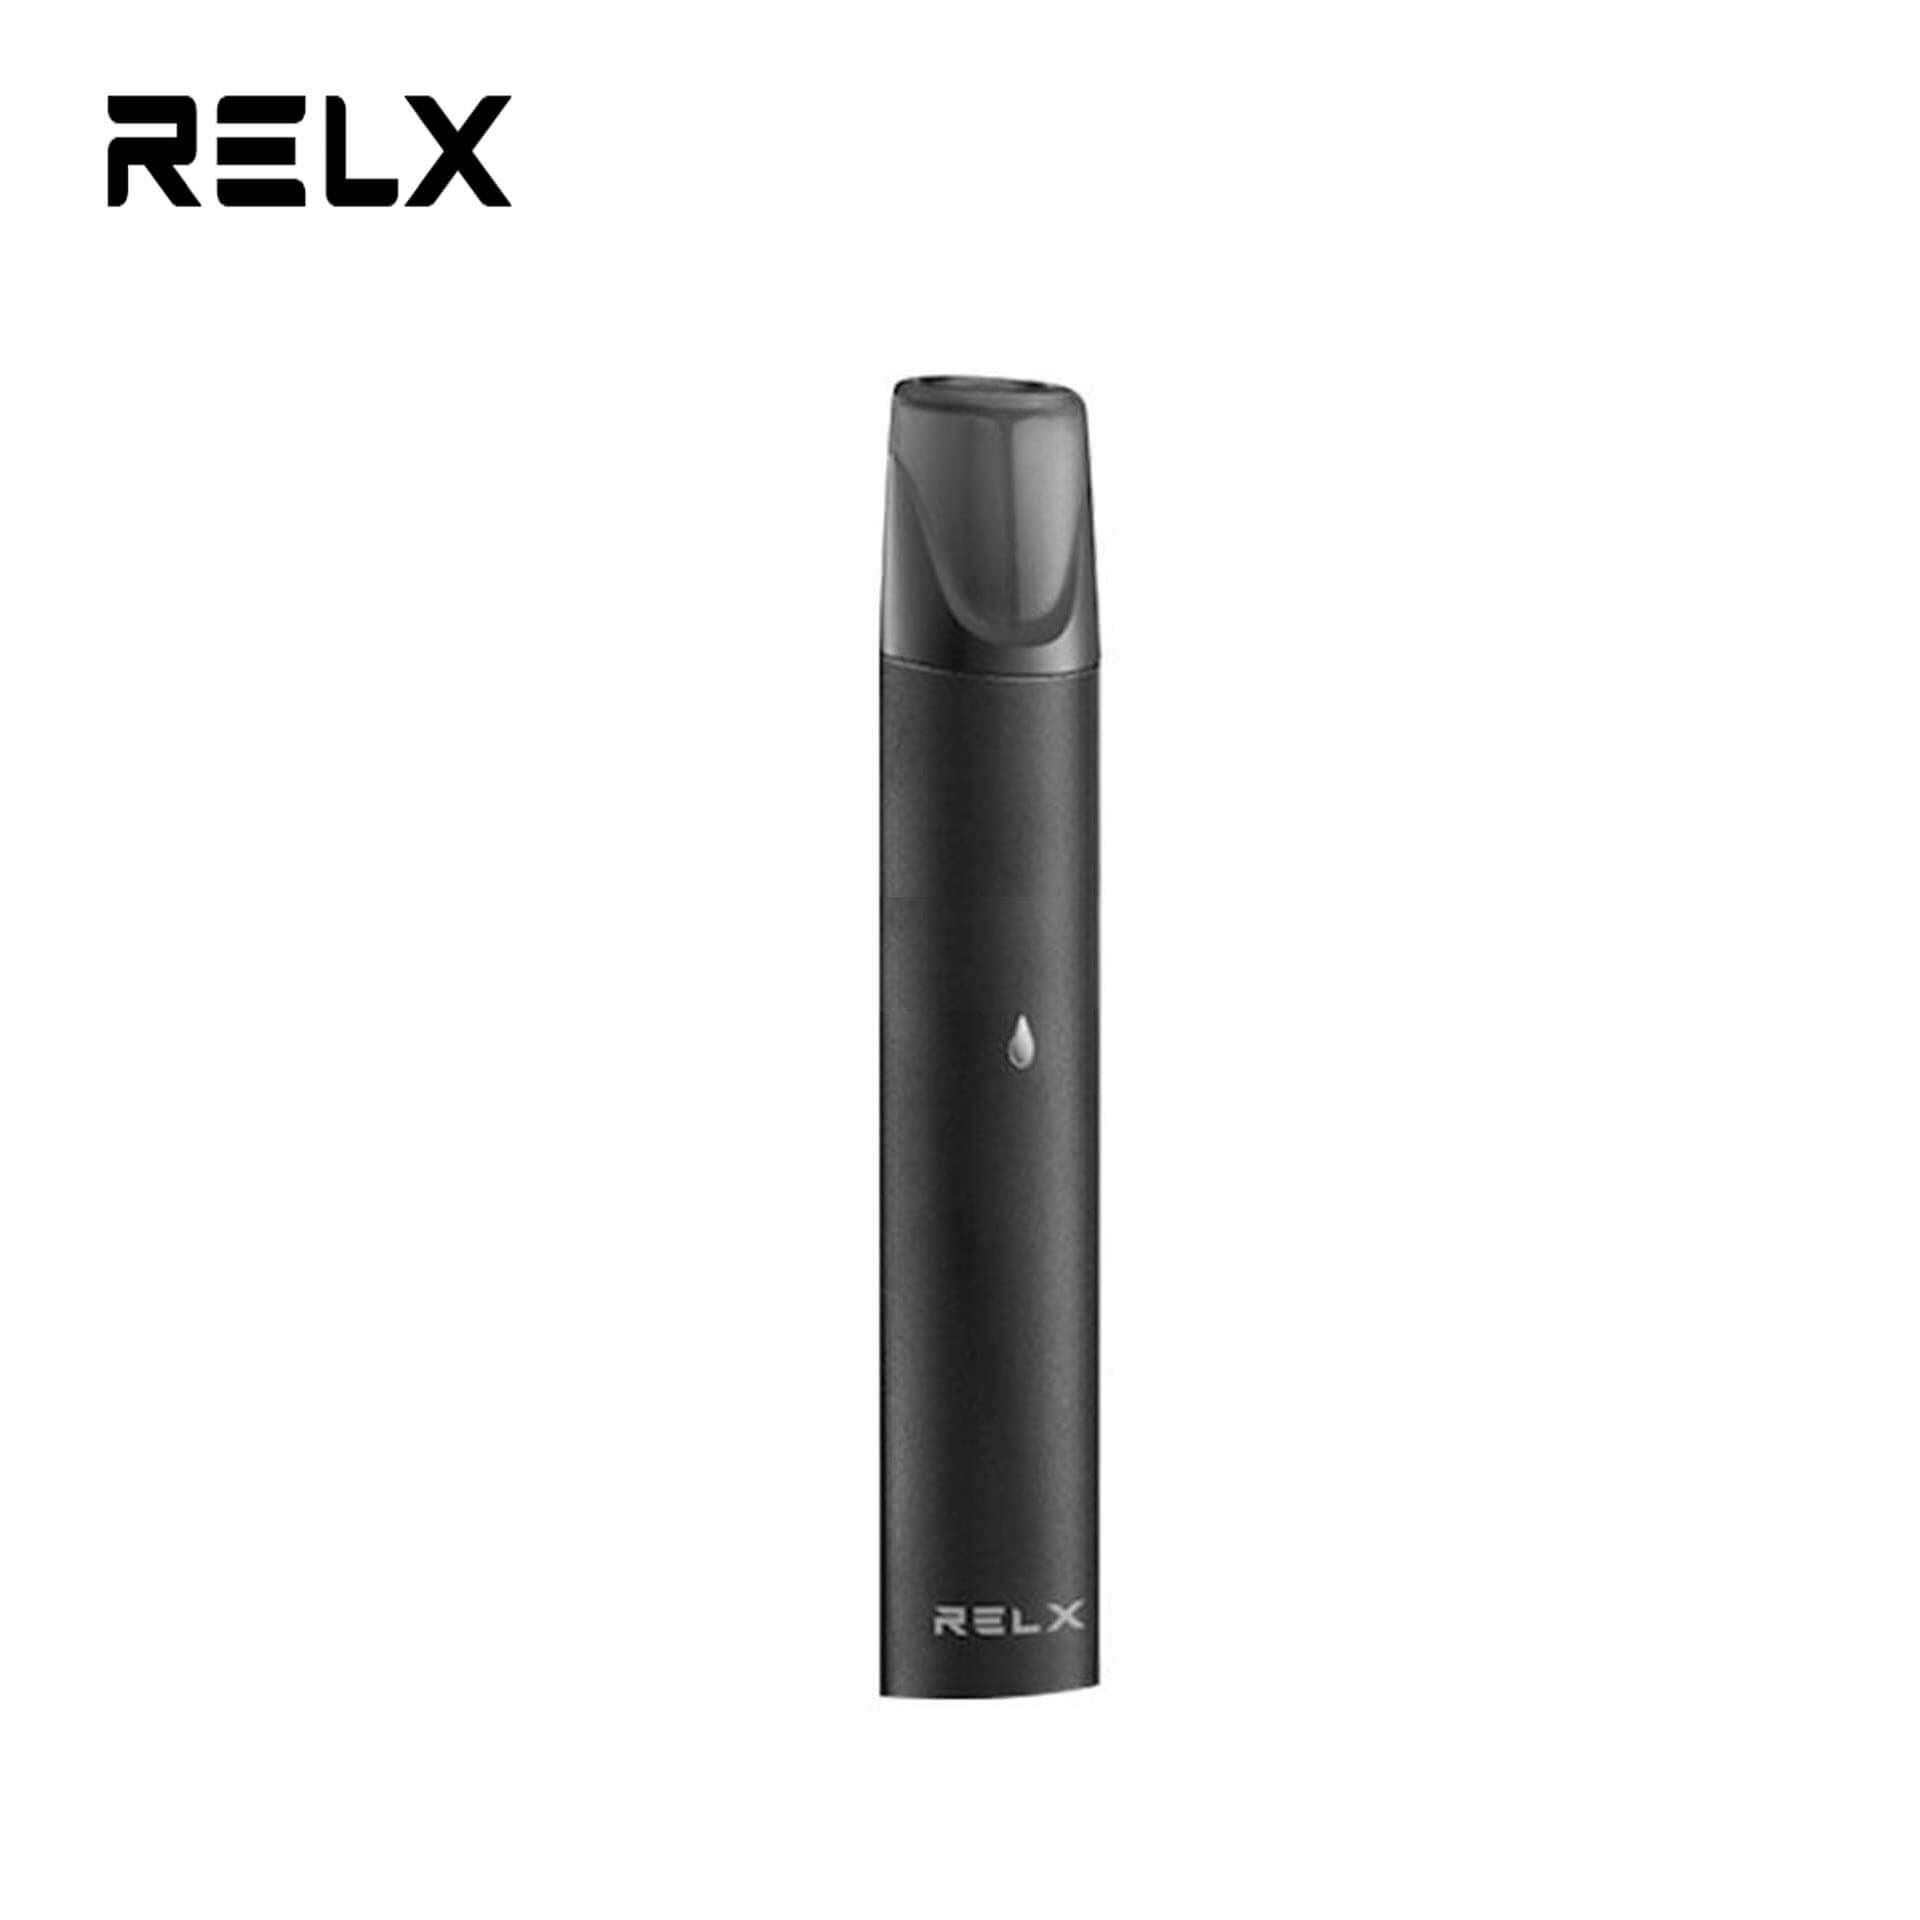 Relx Classic Device (Merlion Vape SG) - Black -Merlion Vape SG